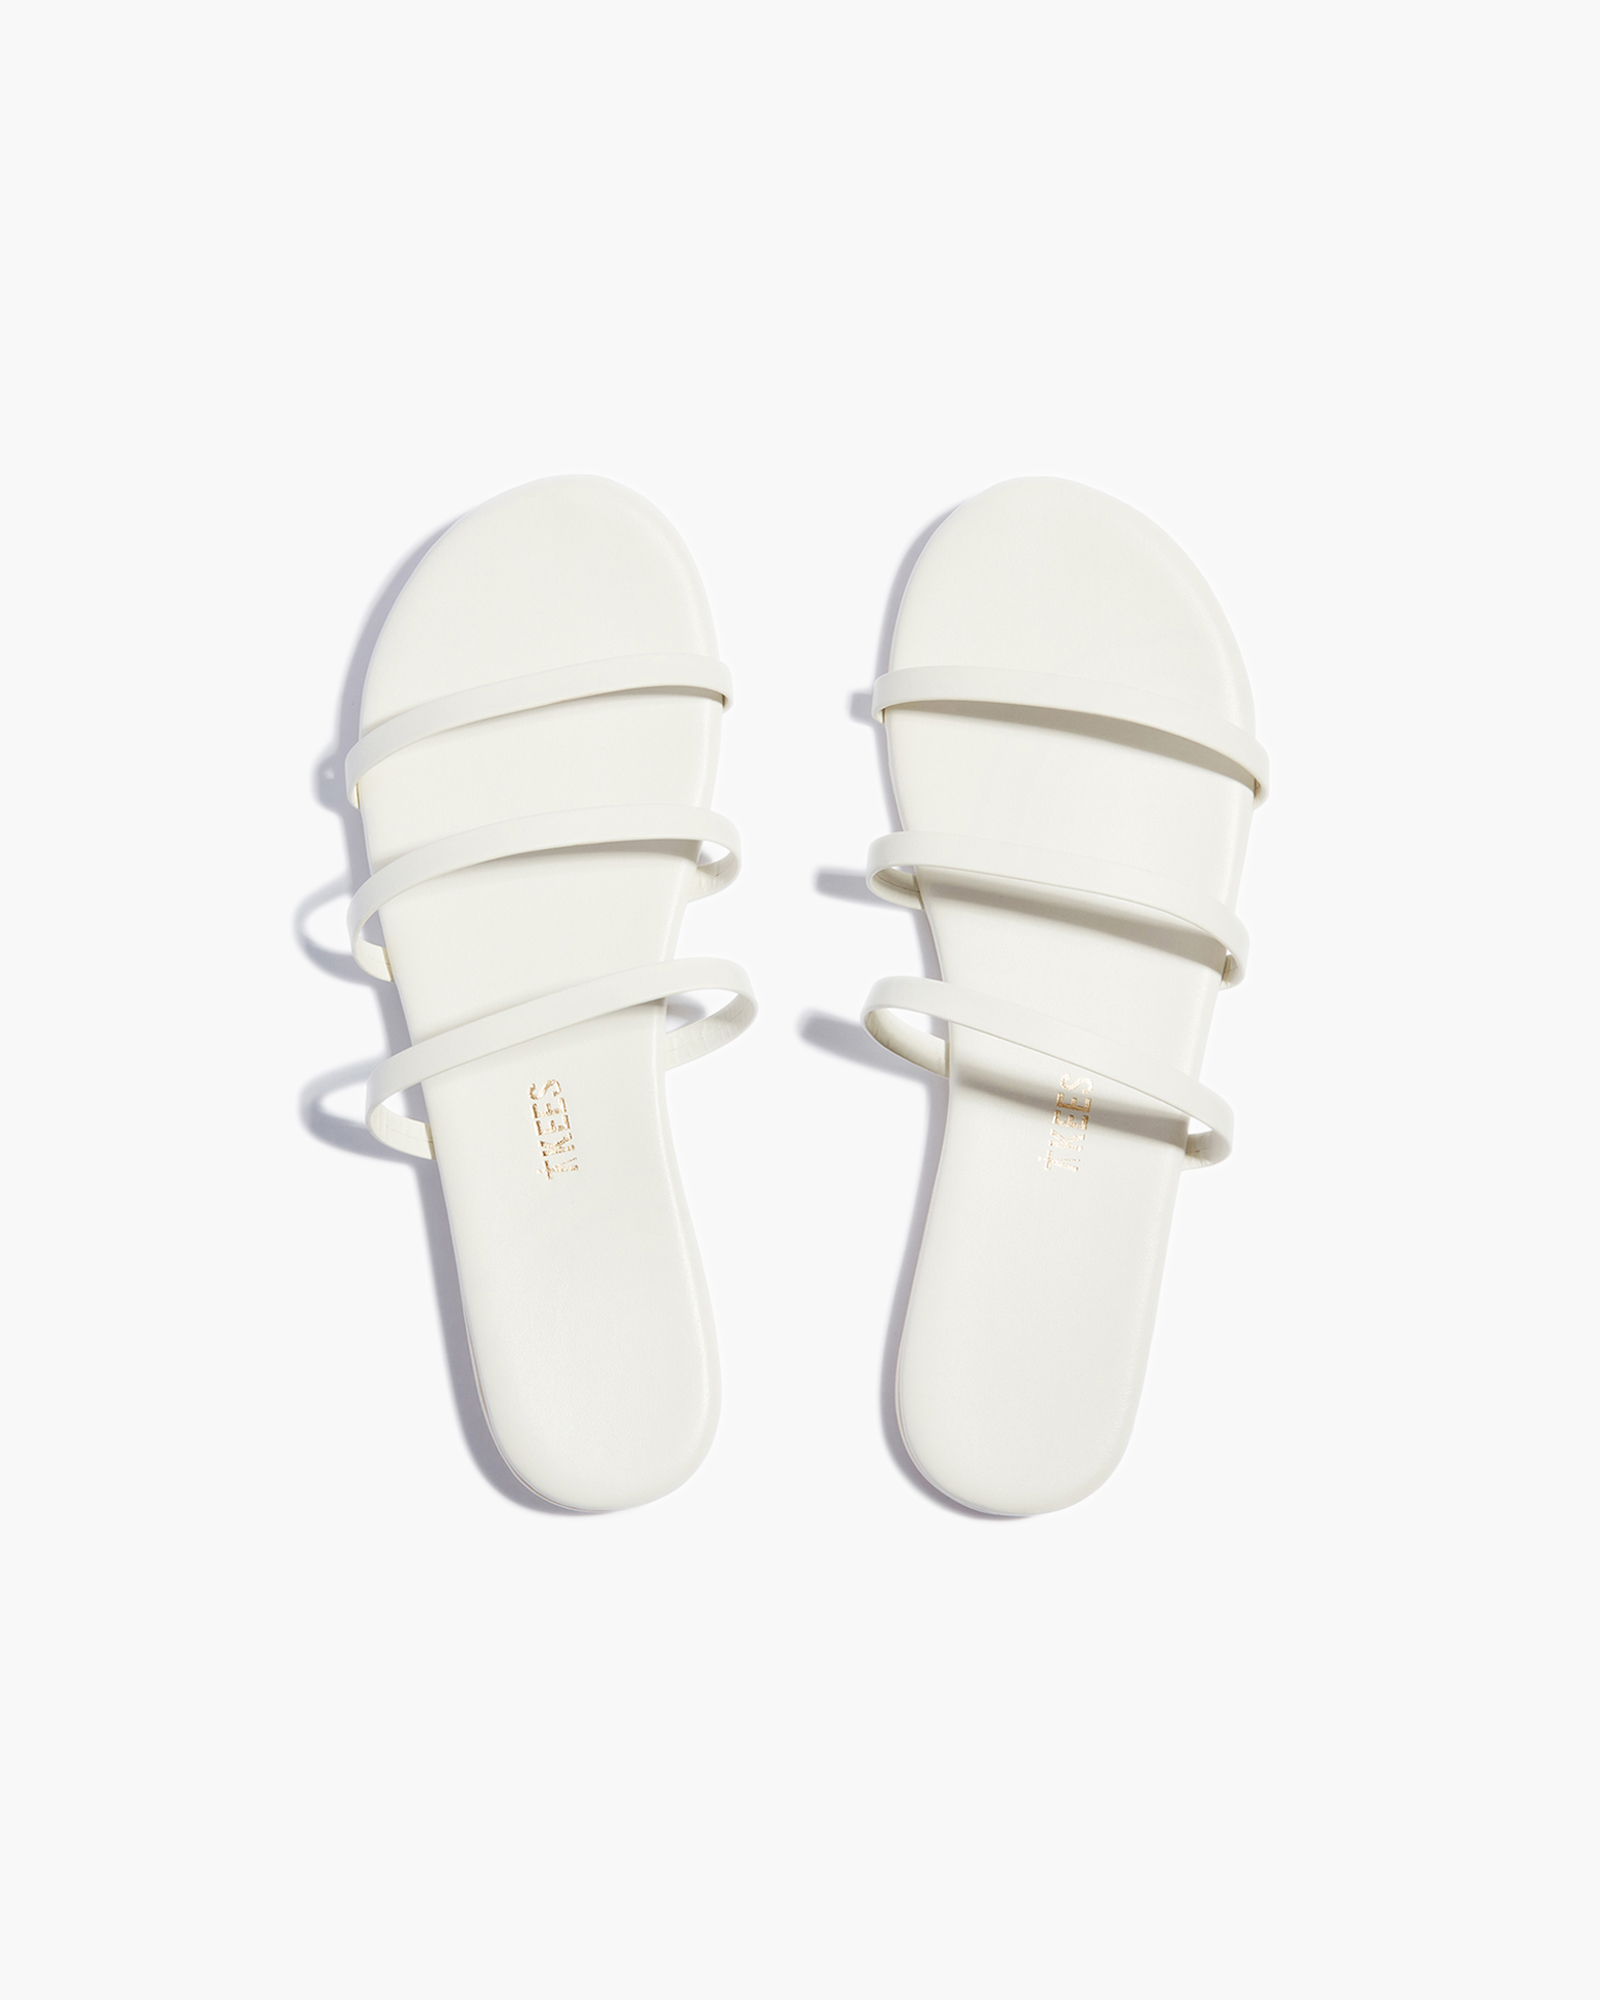 emma sandal - product page